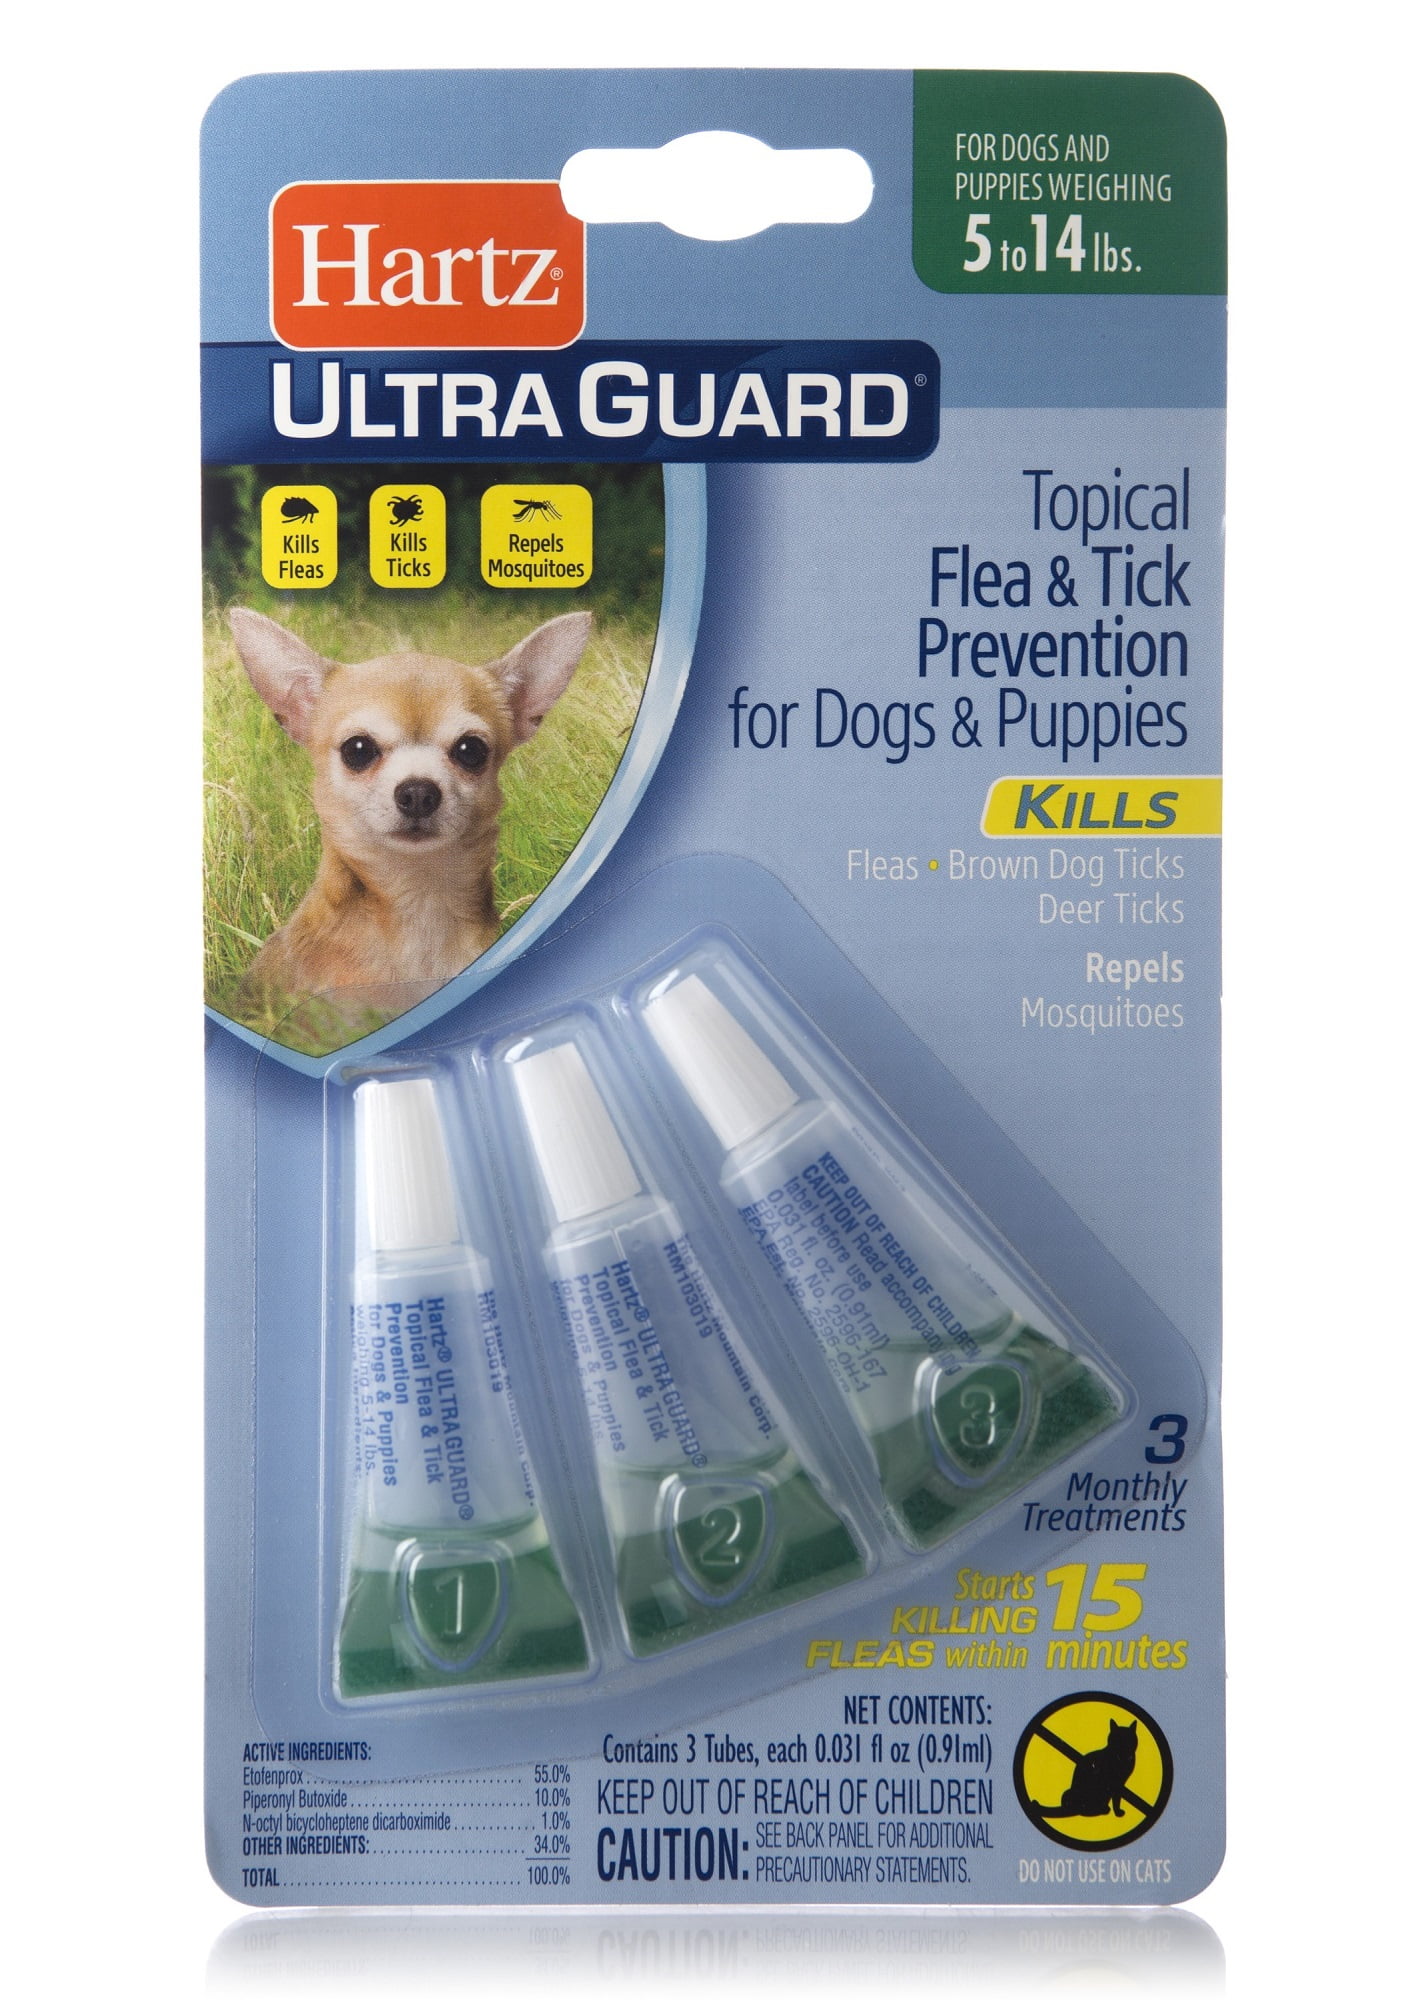 oral flea medication for dogs walmart